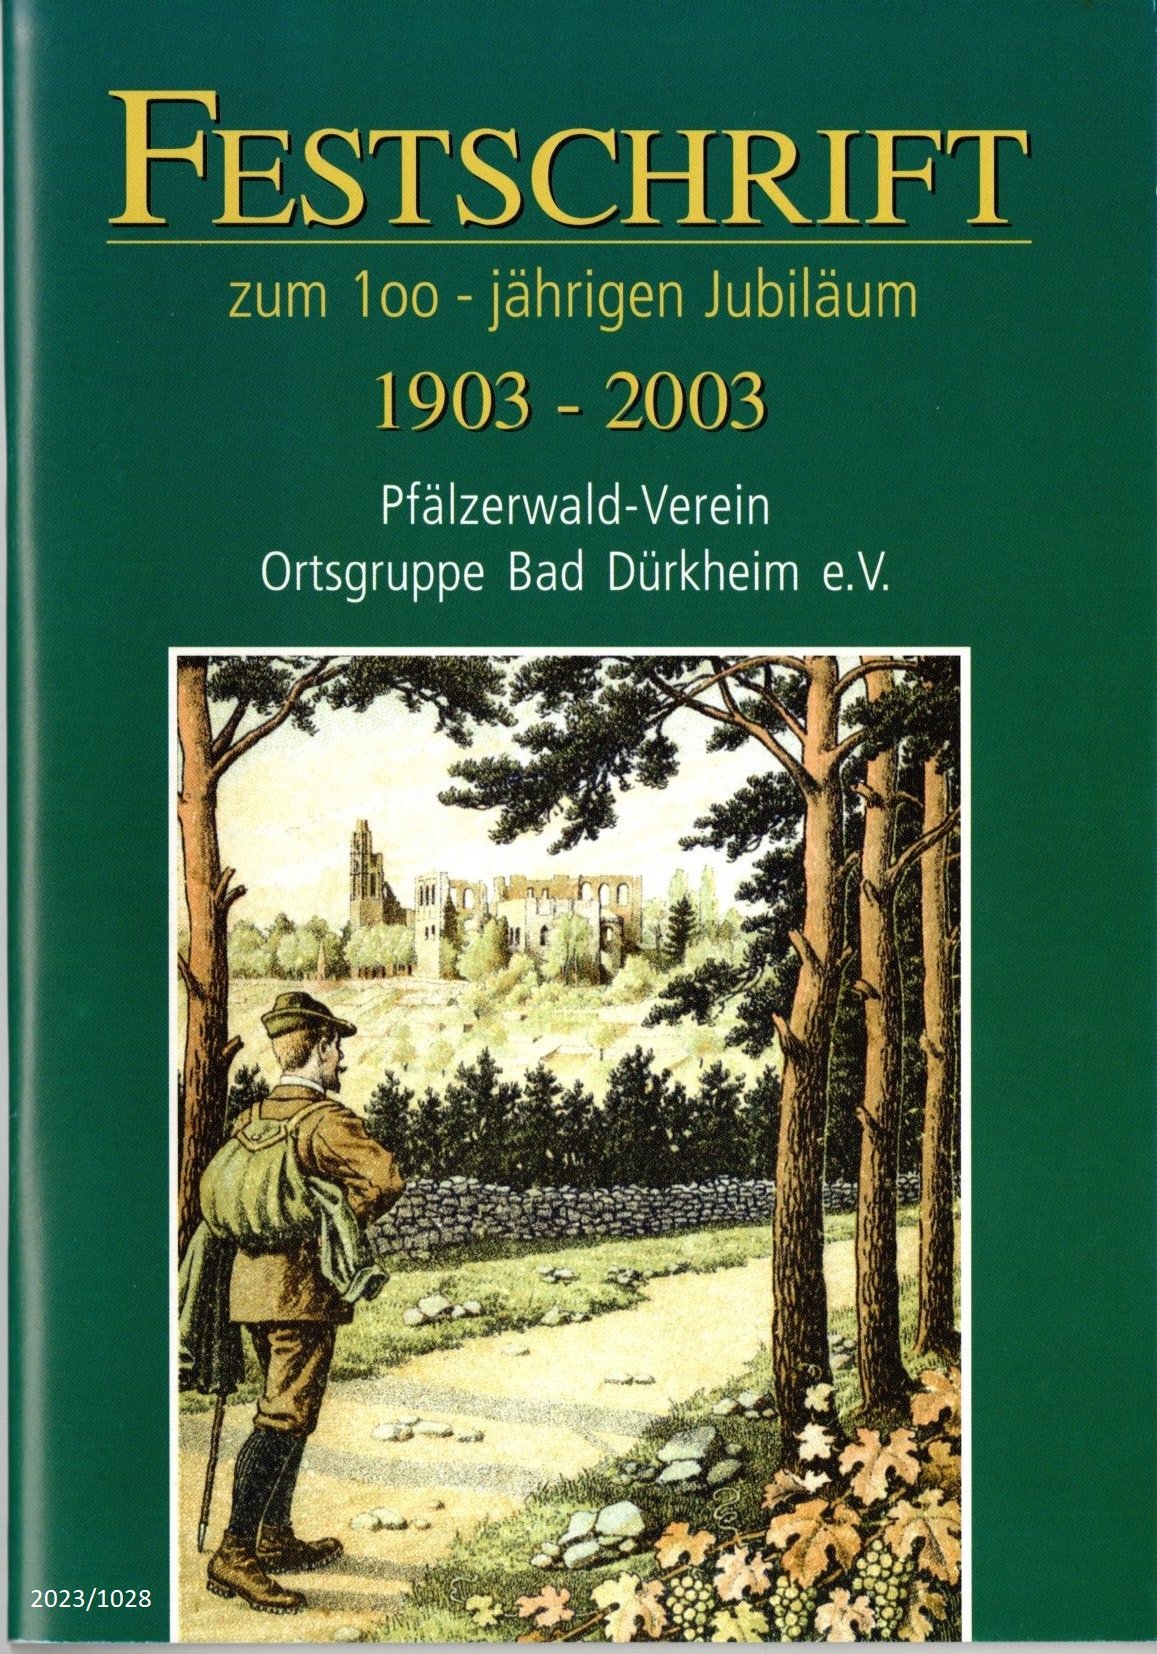 Festschrift zum 100-jährigen Jubiläum 1903-2003 Pfälzerwald-Verein Ortsgruppe Bad Dürkheim e.V. (Stadtmuseum Bad Dürkheim im Kulturzentrum Haus Catoir CC BY-NC-SA)